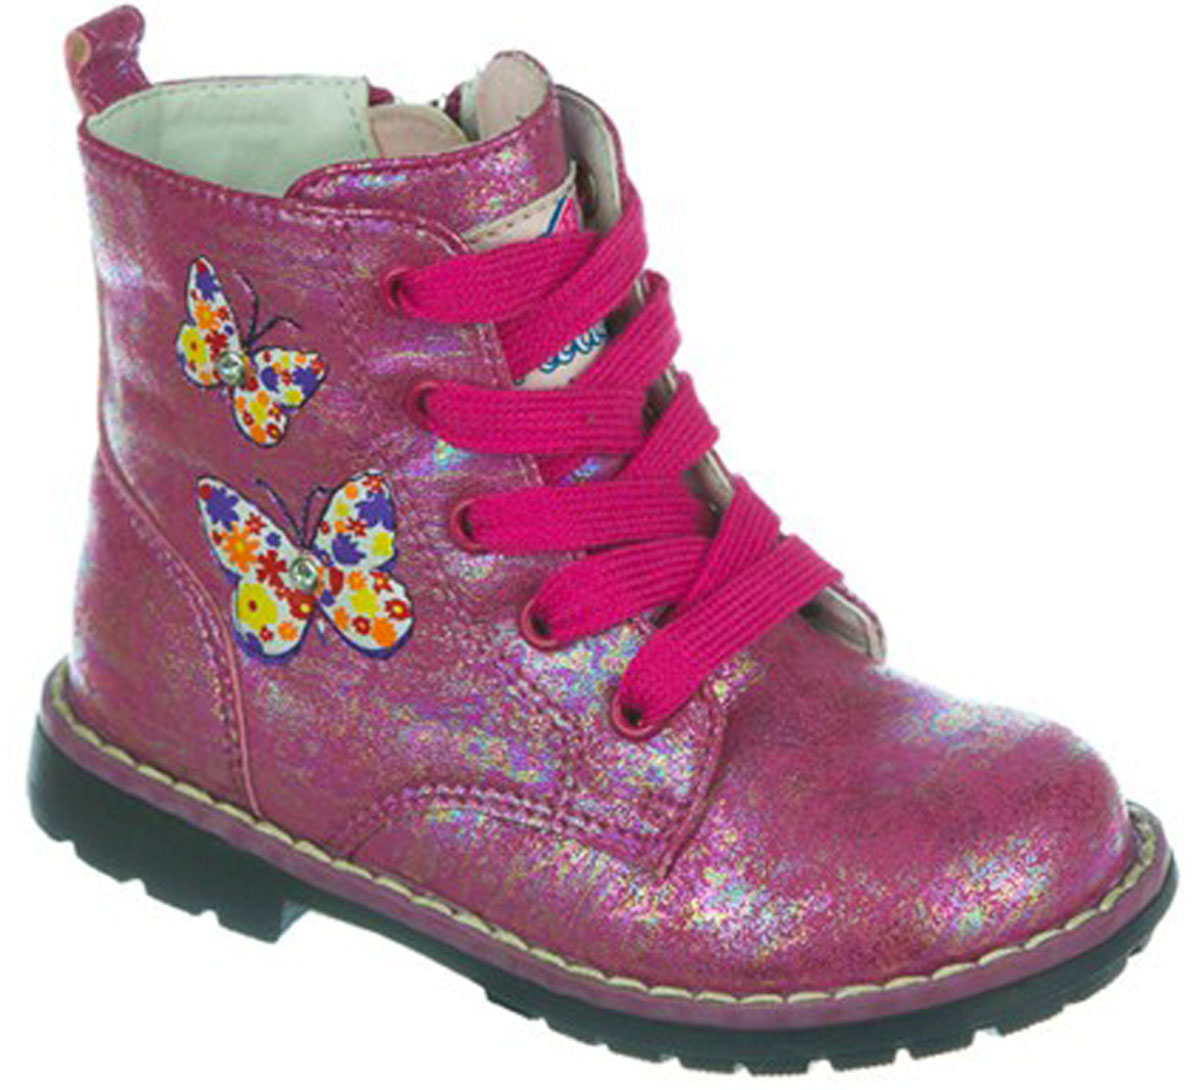 Ботинки для девочки Indigo Kids, цвет: фуксия. 51-293A/12. Размер 26